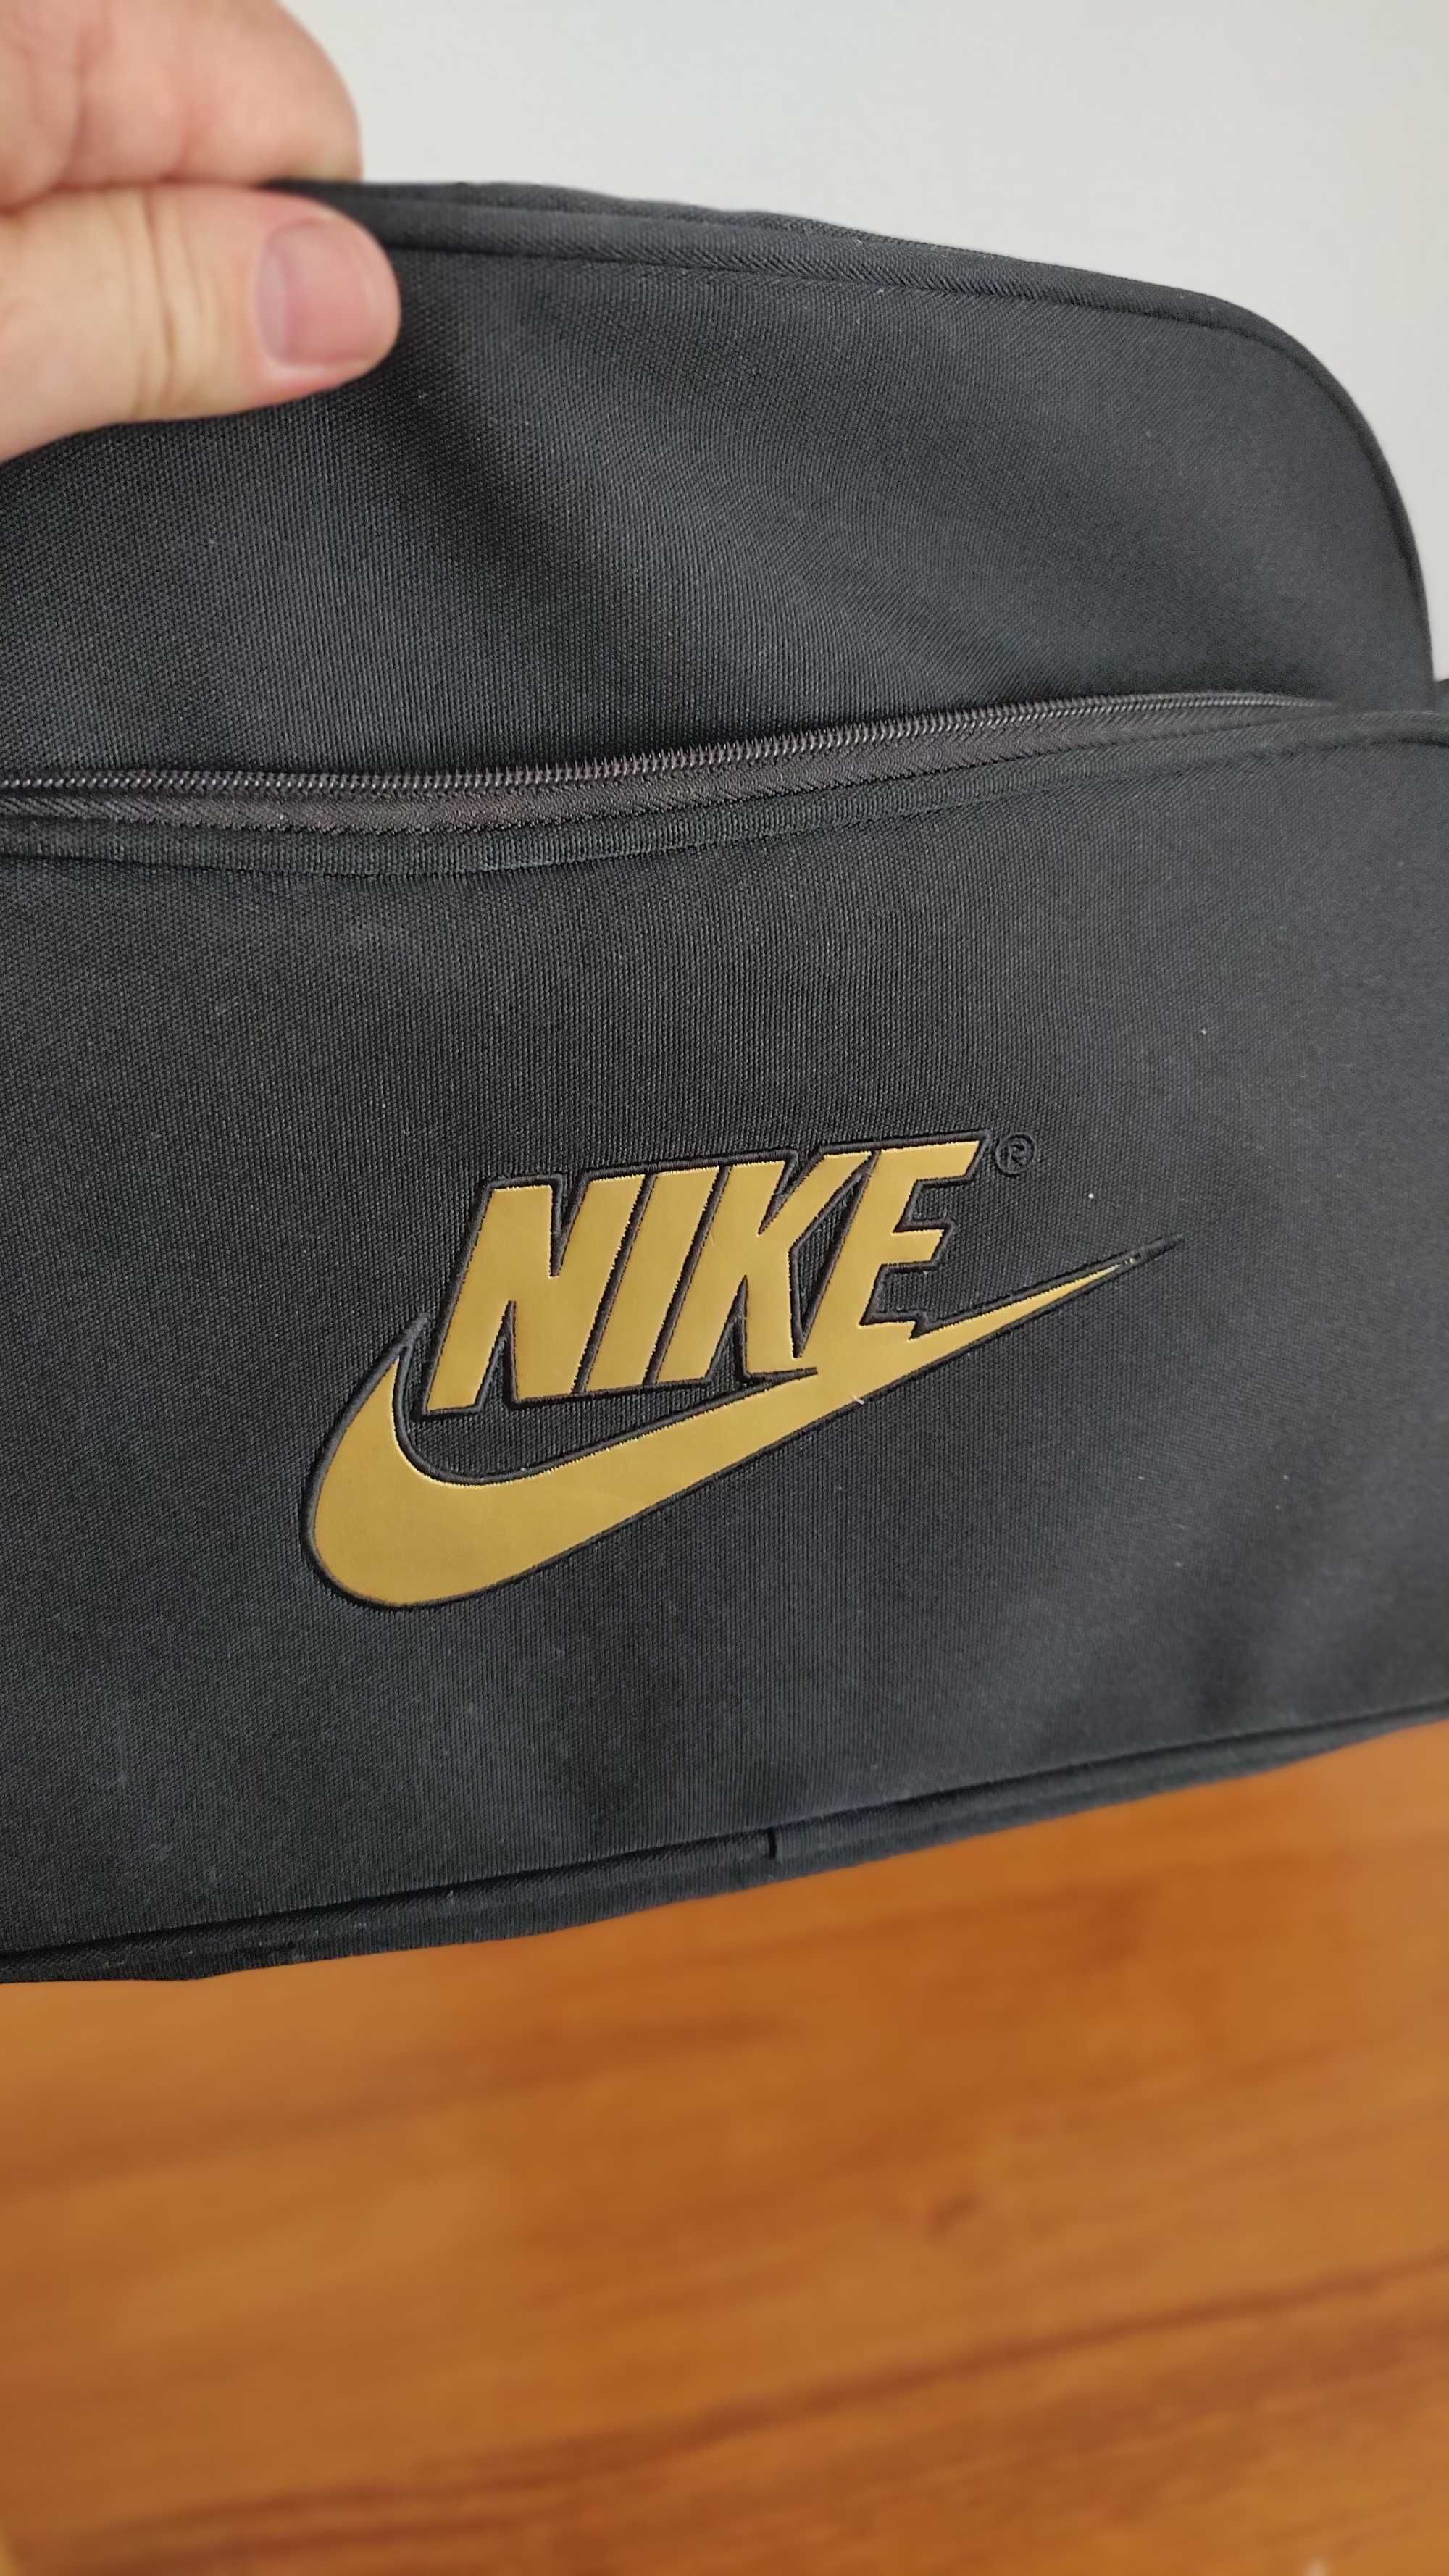 Torba Nike fajna